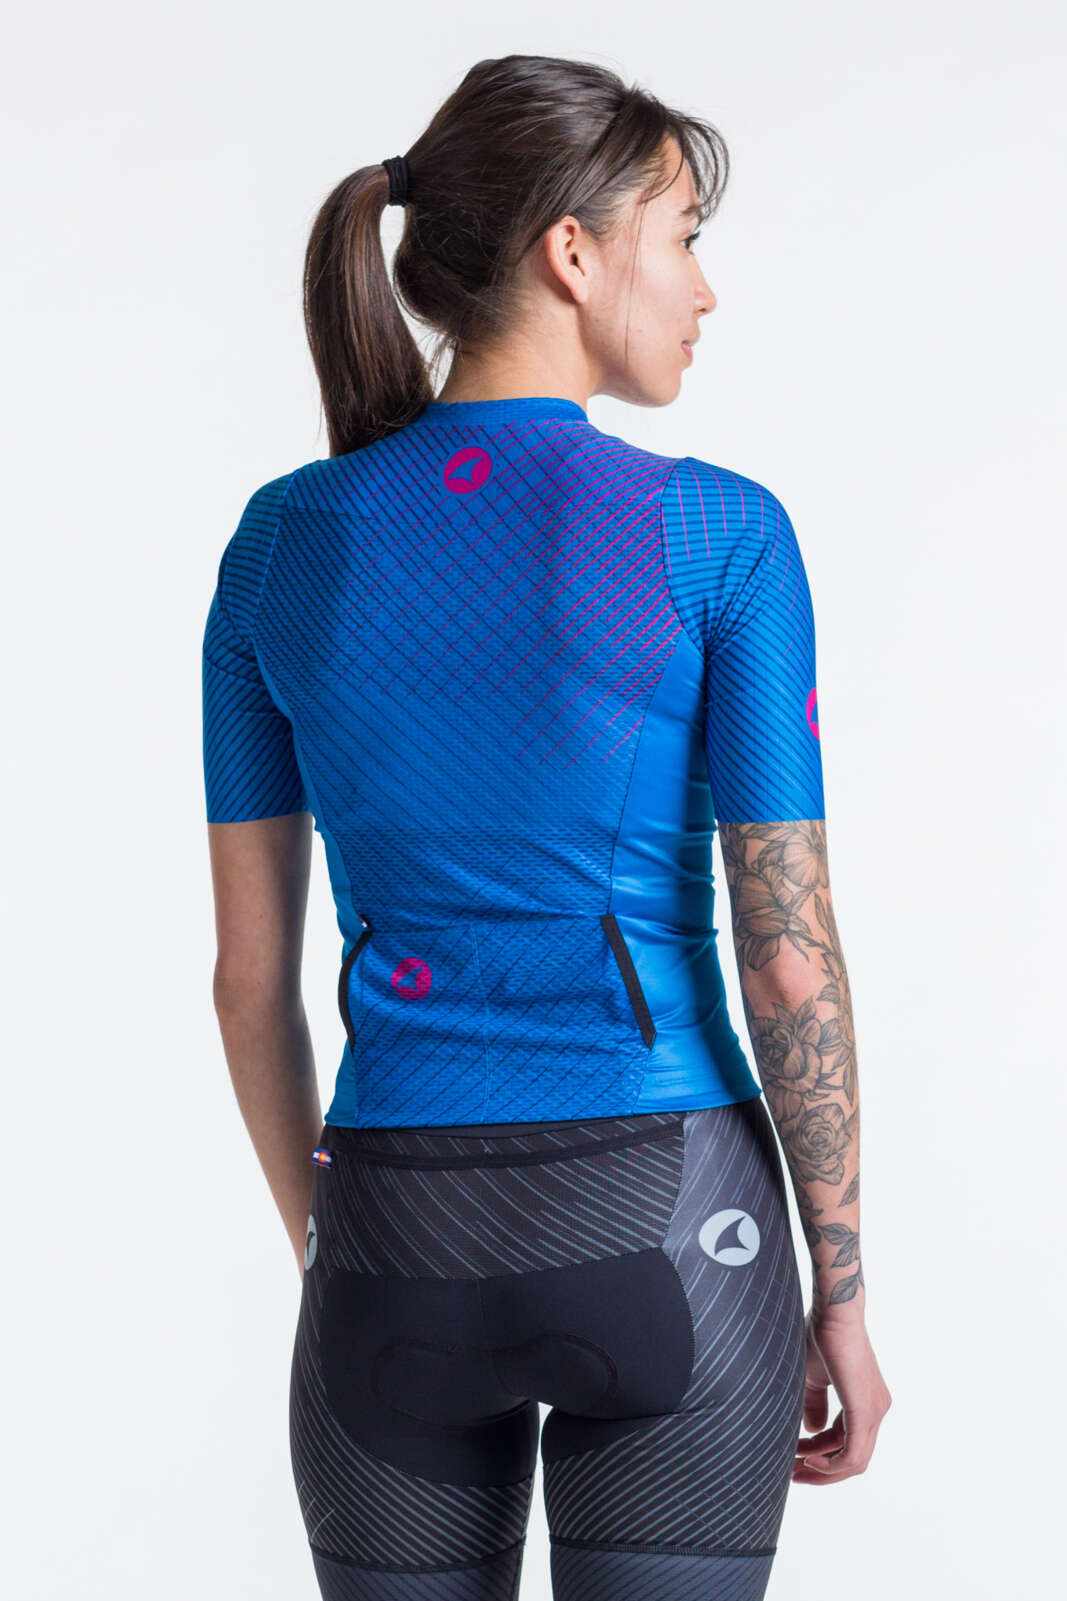 Women's Triathlon Top - Blue Short Sleeve Back View